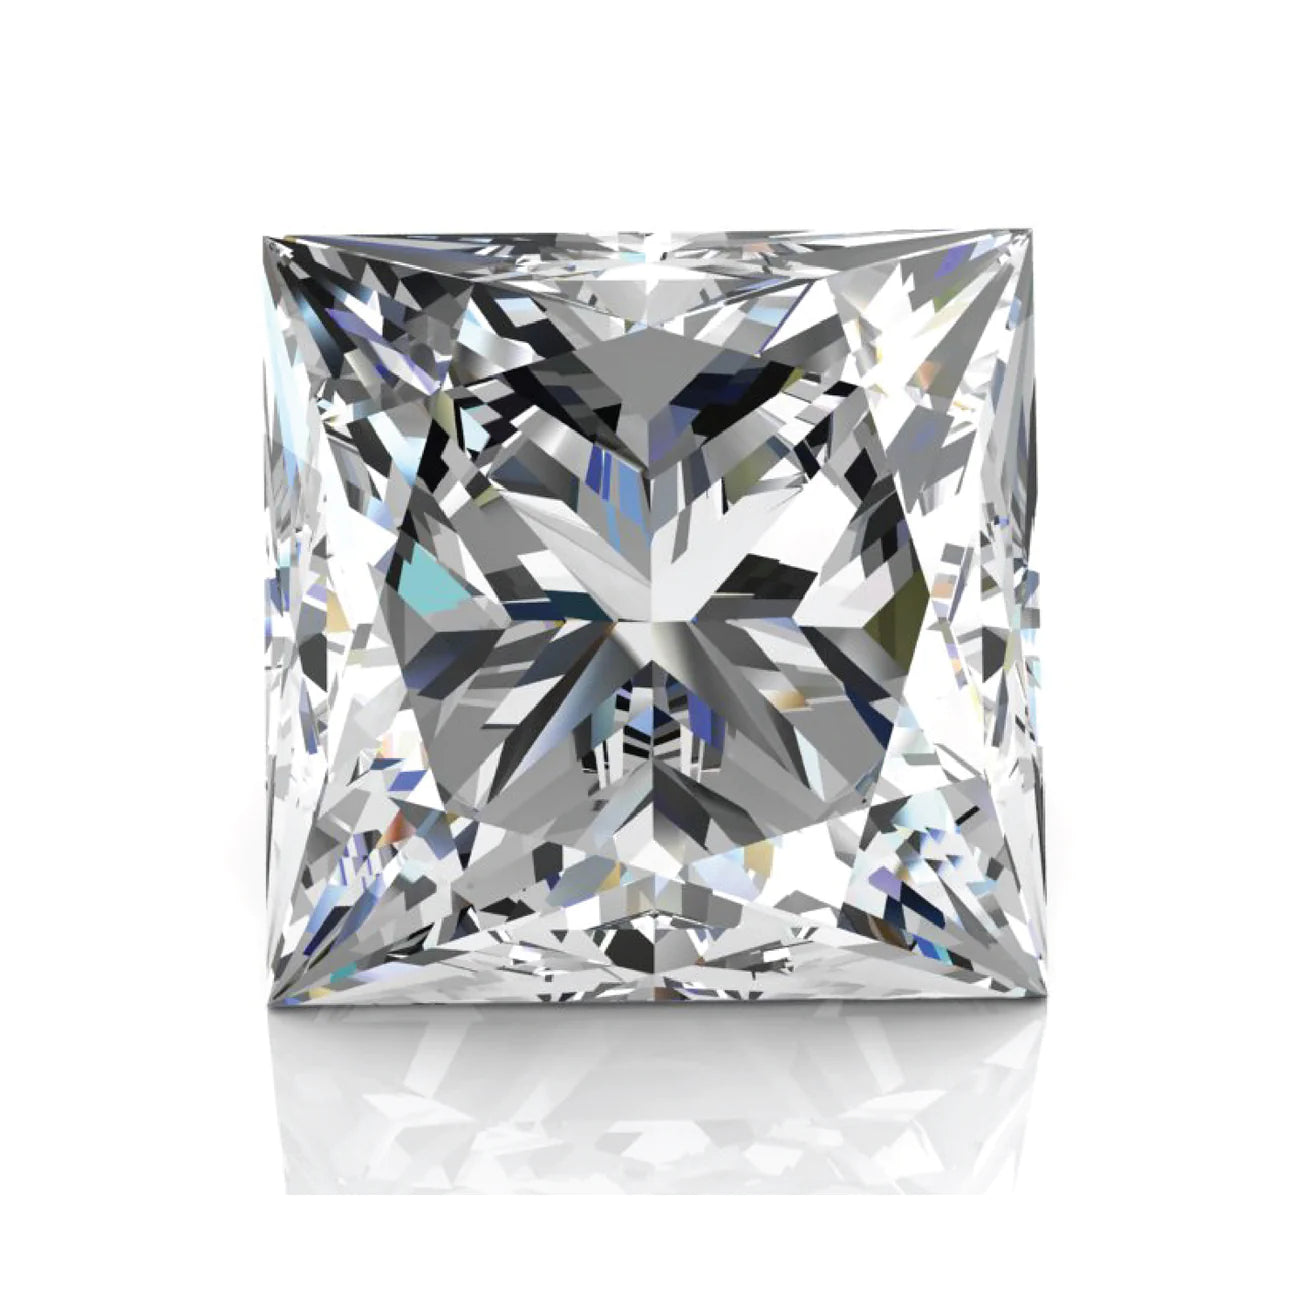 .82 Lab Grown Princess Cut Diamond , Color D , Clarity VS1 - GCAL  LG330682548